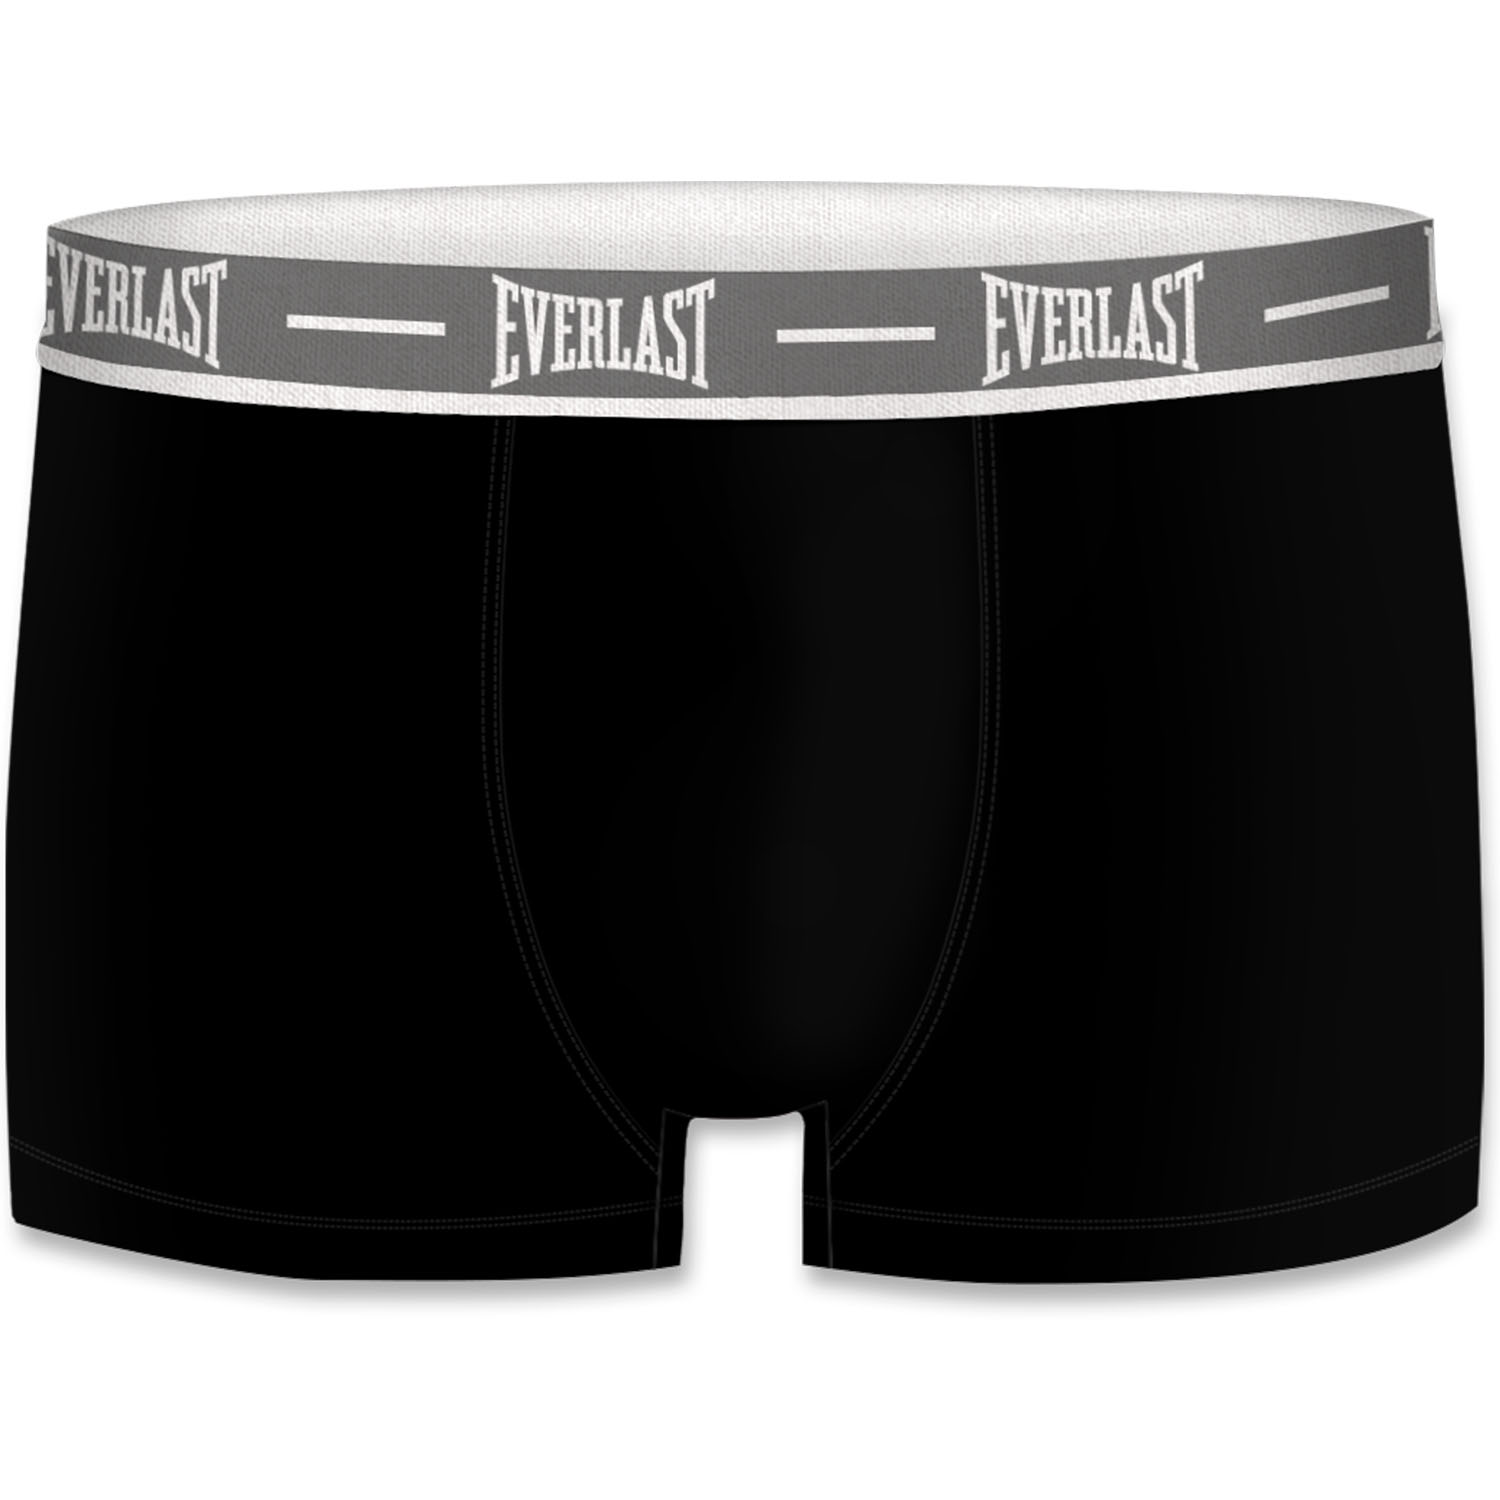 Everlast Boxershorts, AS2, black-grey